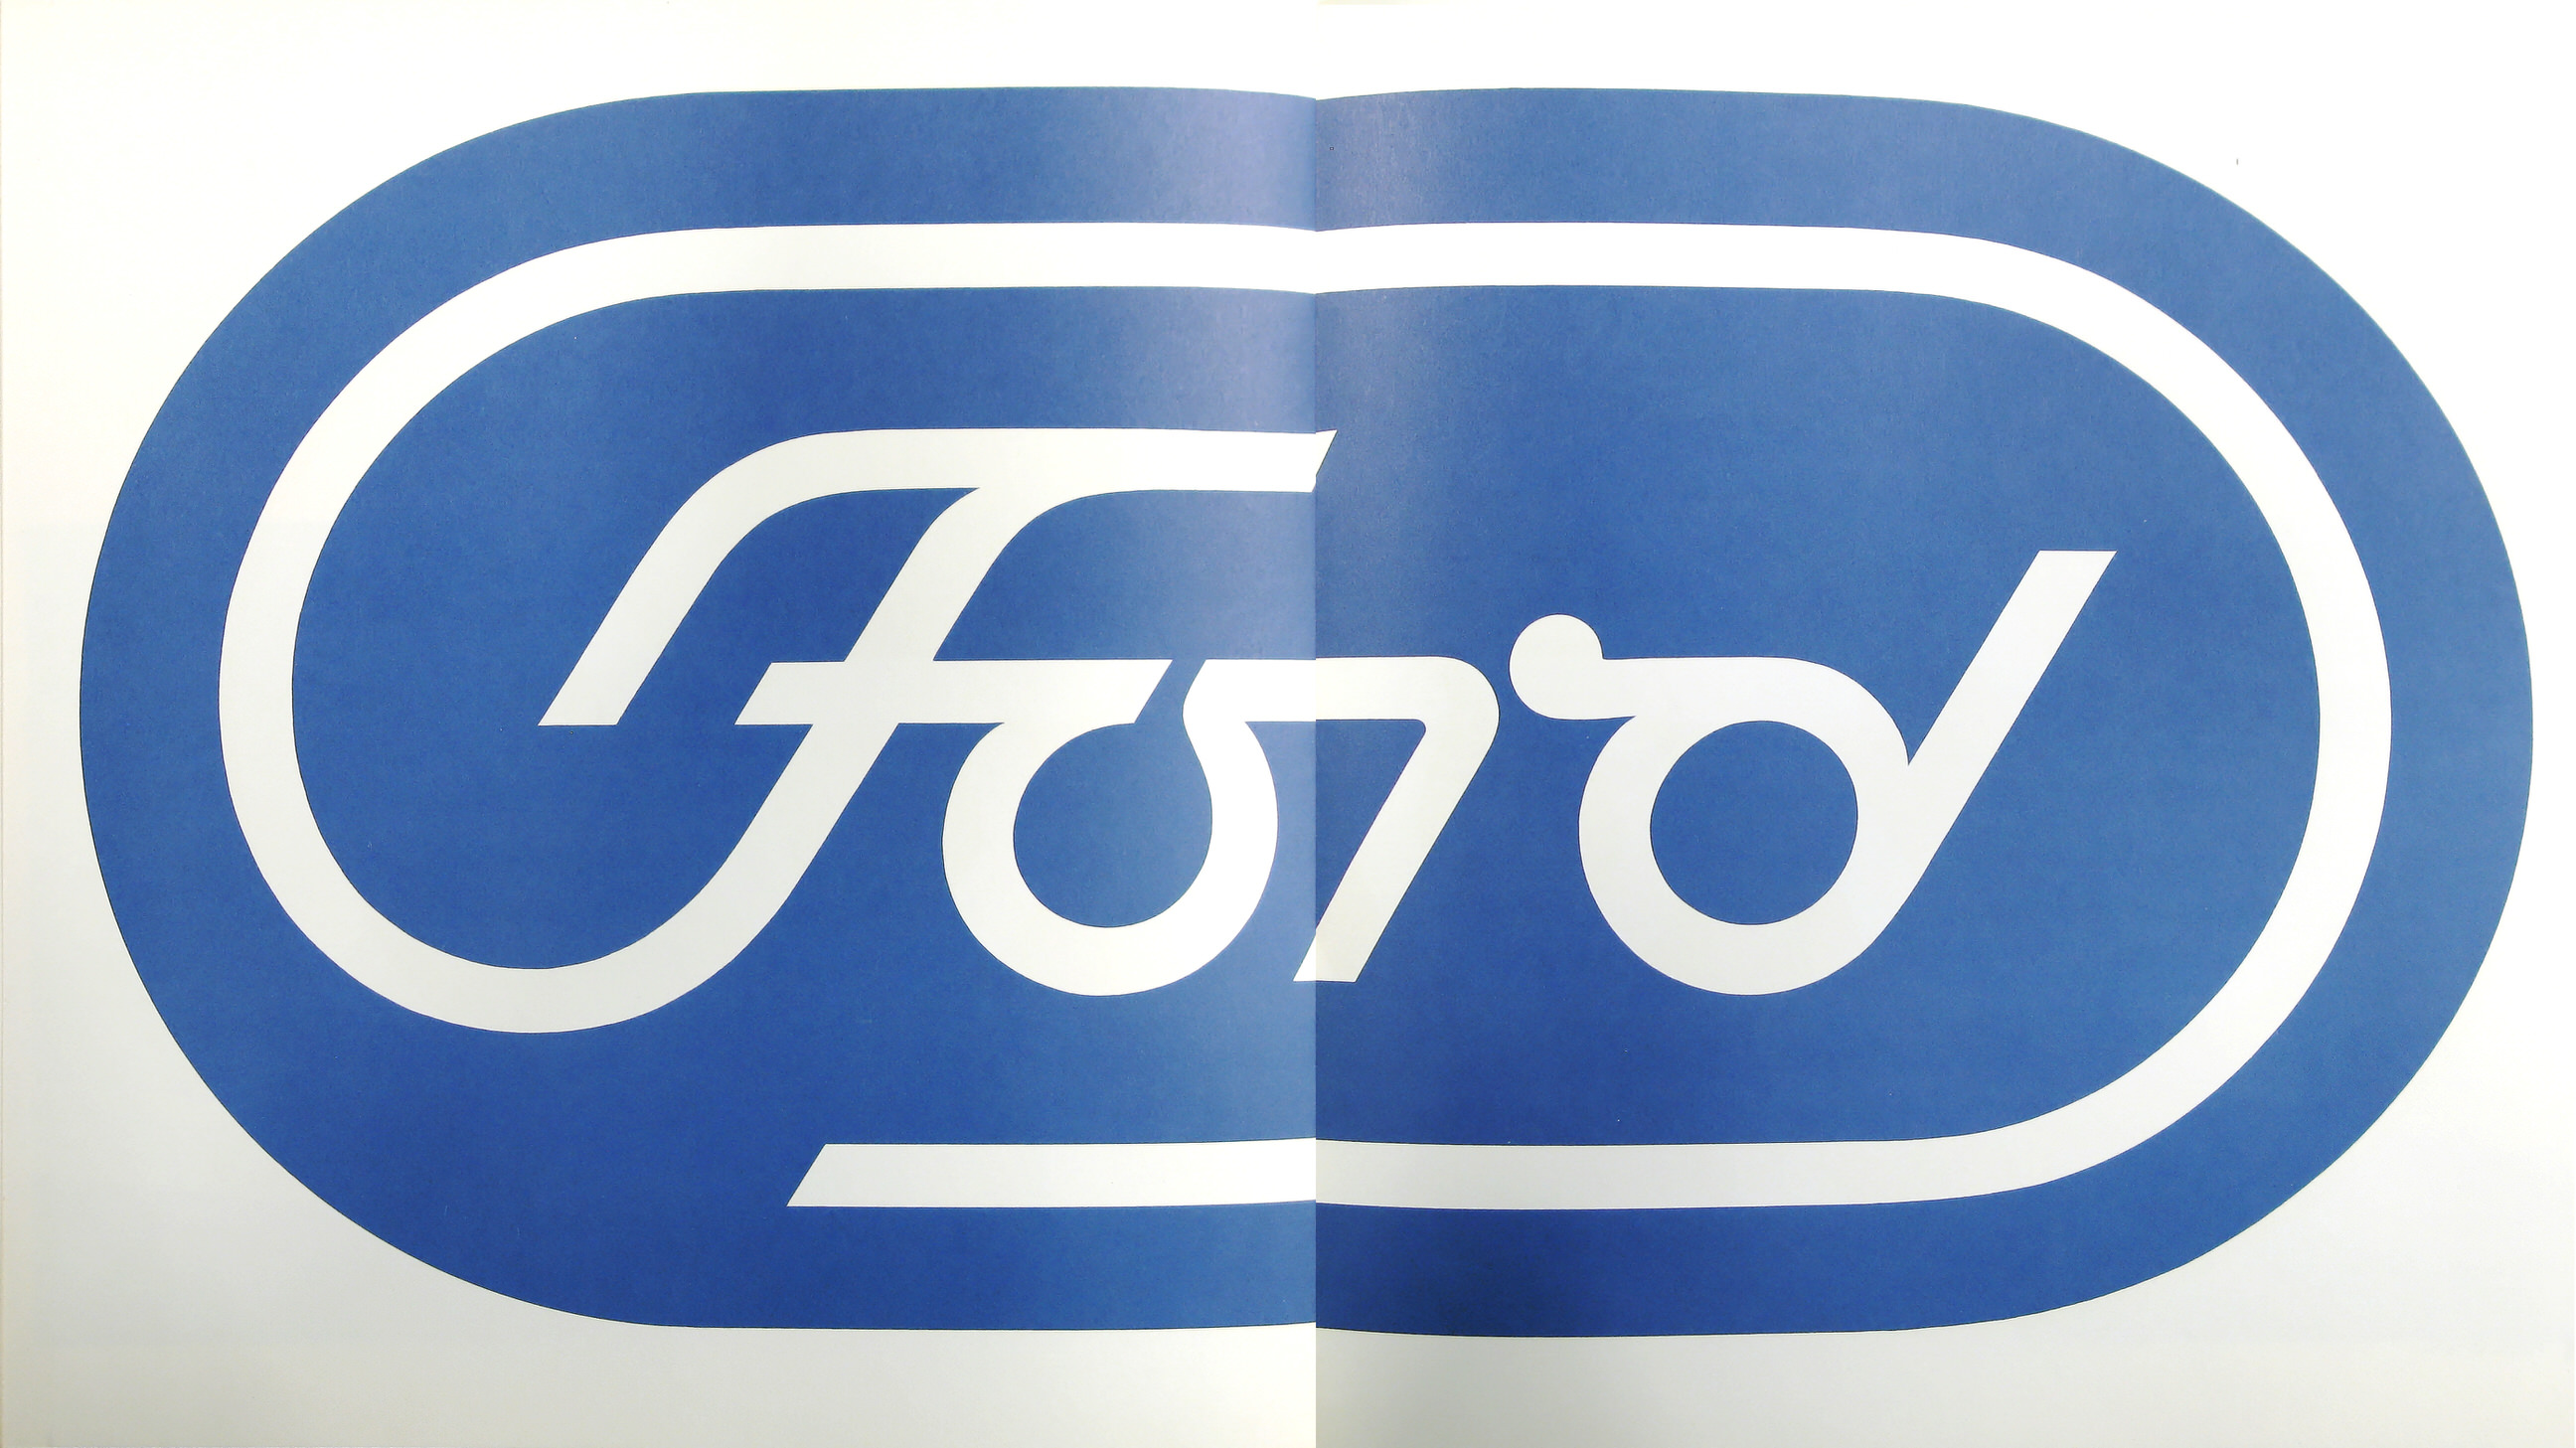 Ford Motor Company  Paul Rand: Modernist Master 1914-1996